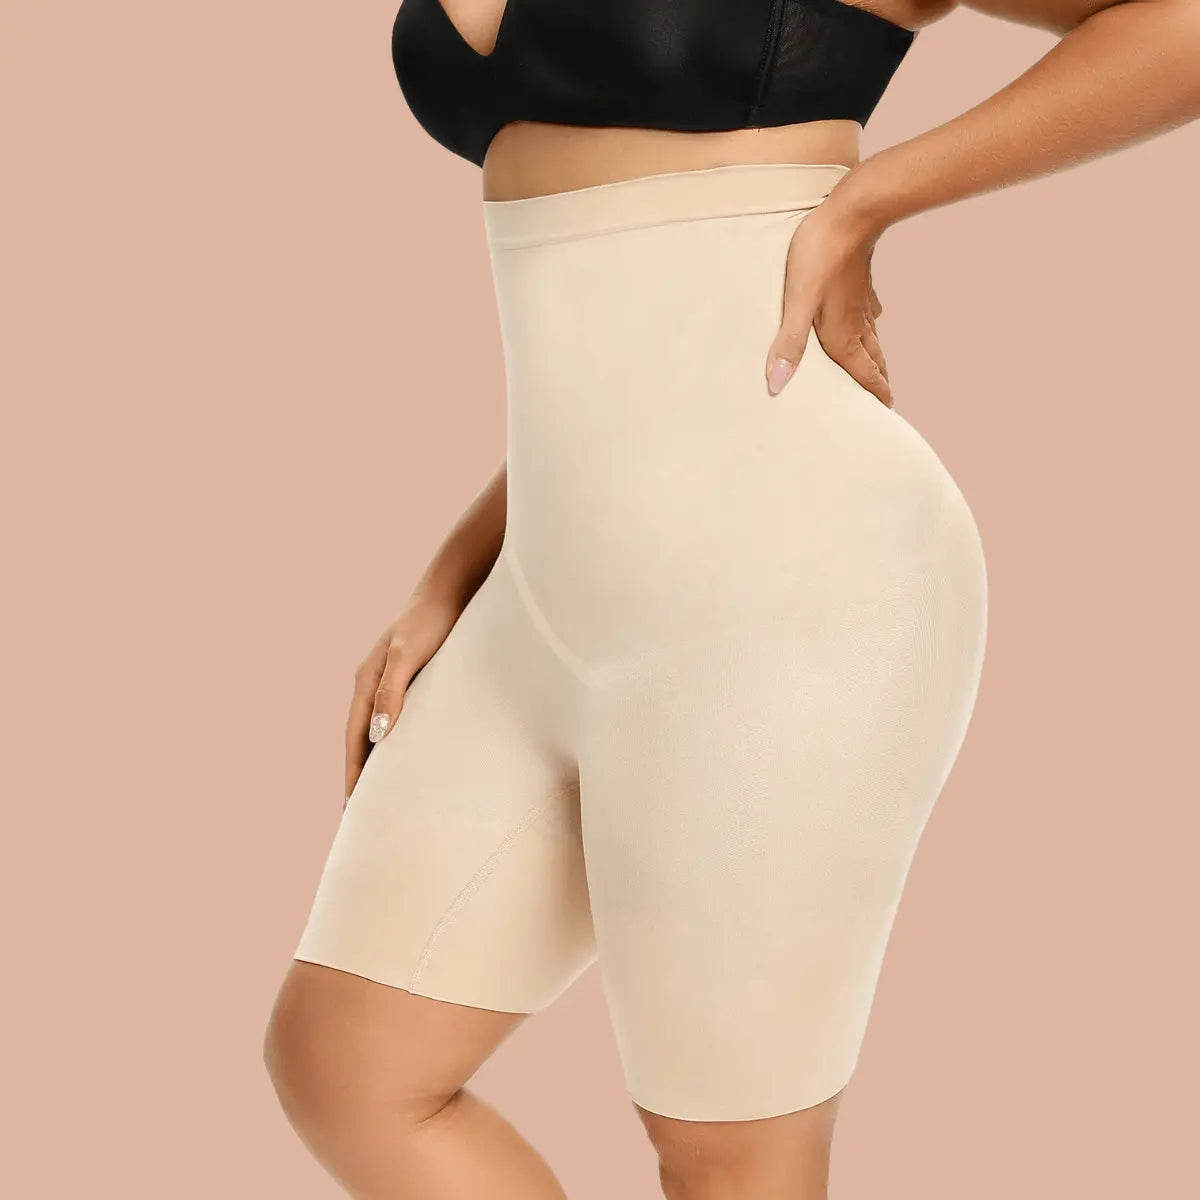 SHAPERX Womens Underwear Cotton Stretch or Bikini Comfort Briefs Panties  Pack of 3 Multicolor